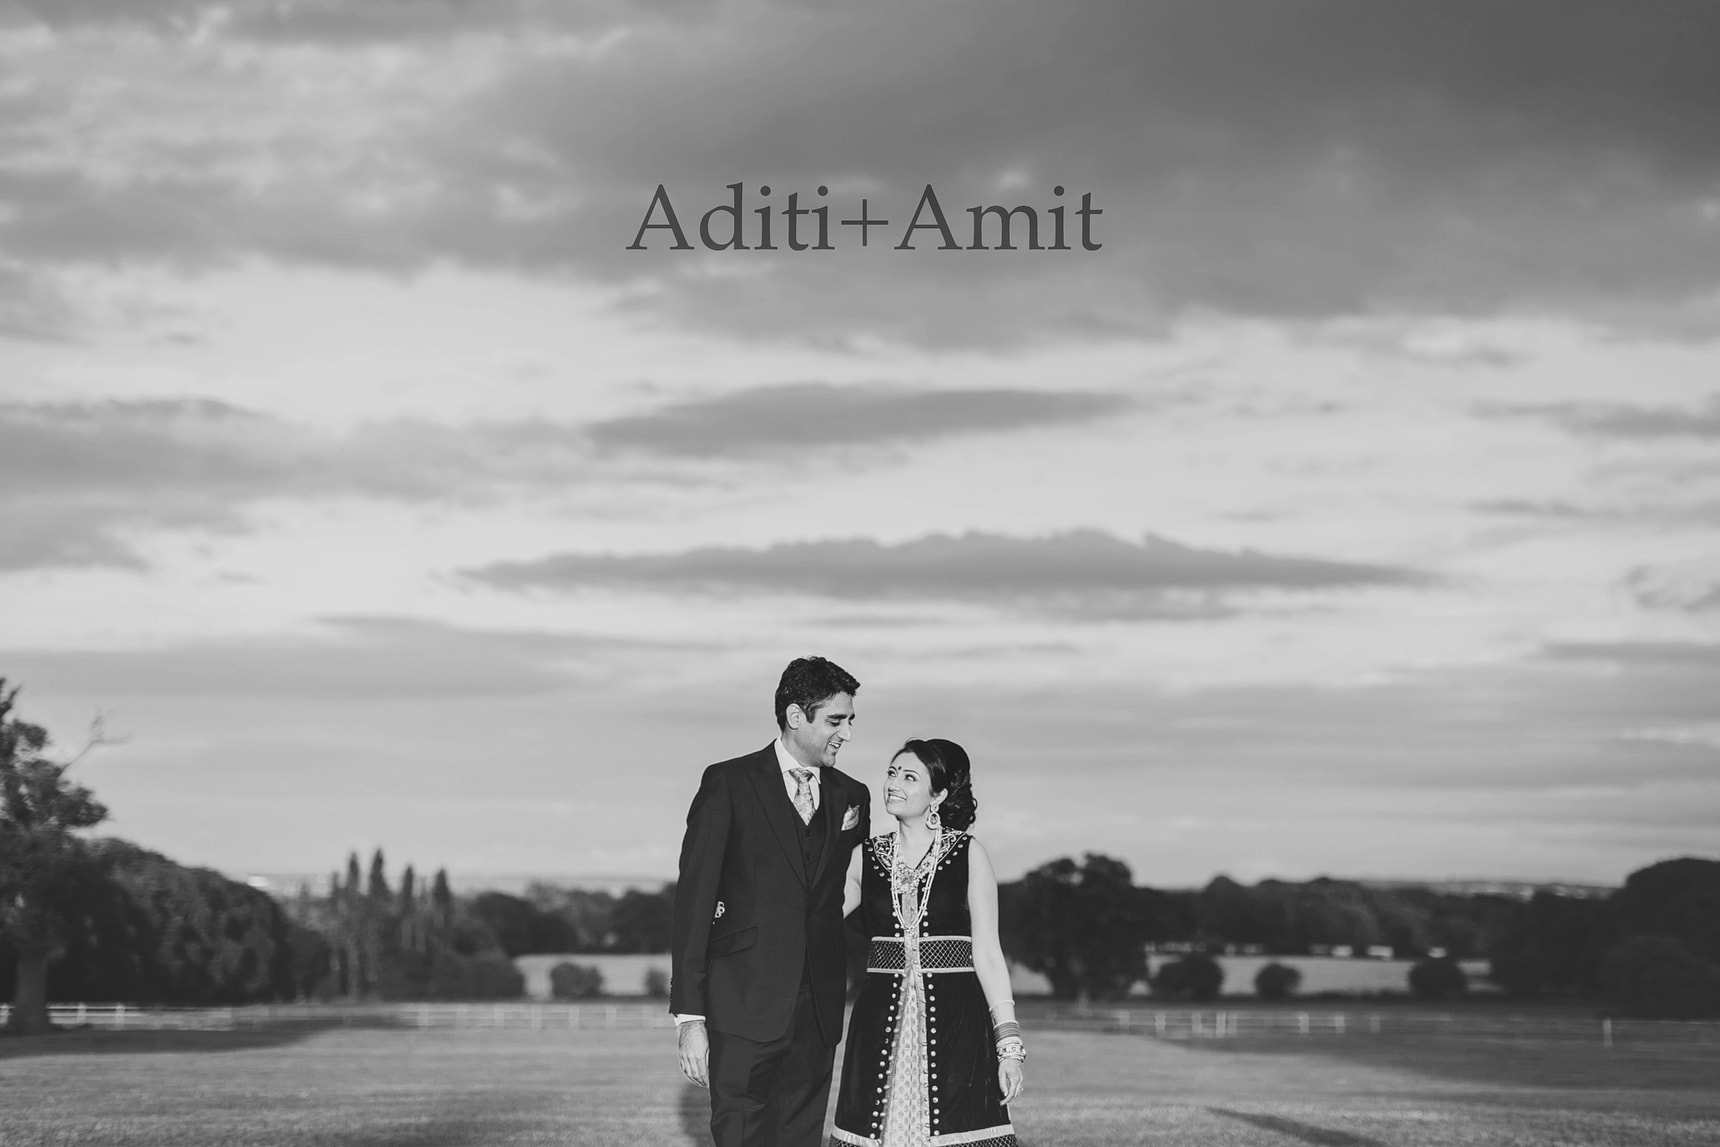 aditi and amits hindu wedding